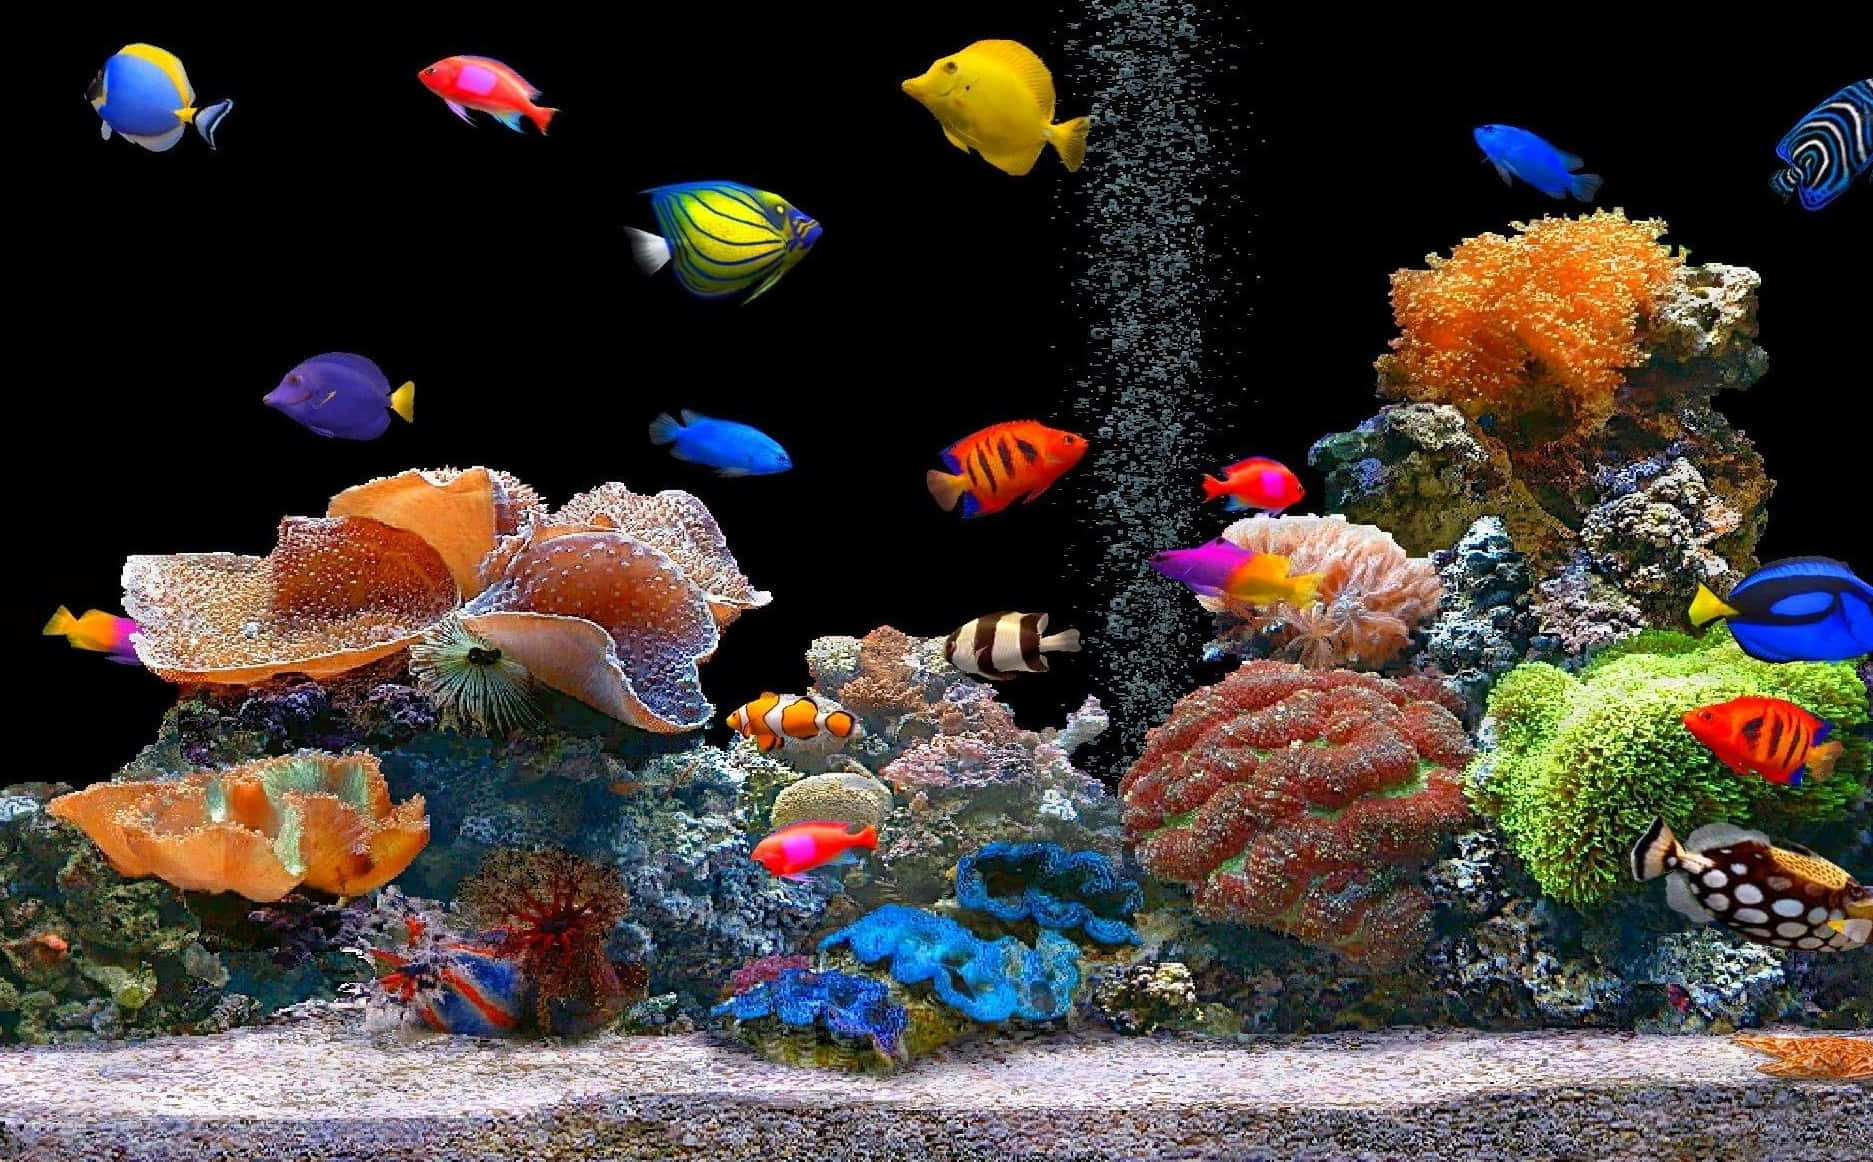 Akvarium Fish Tank 1873 X 1162 Wallpaper